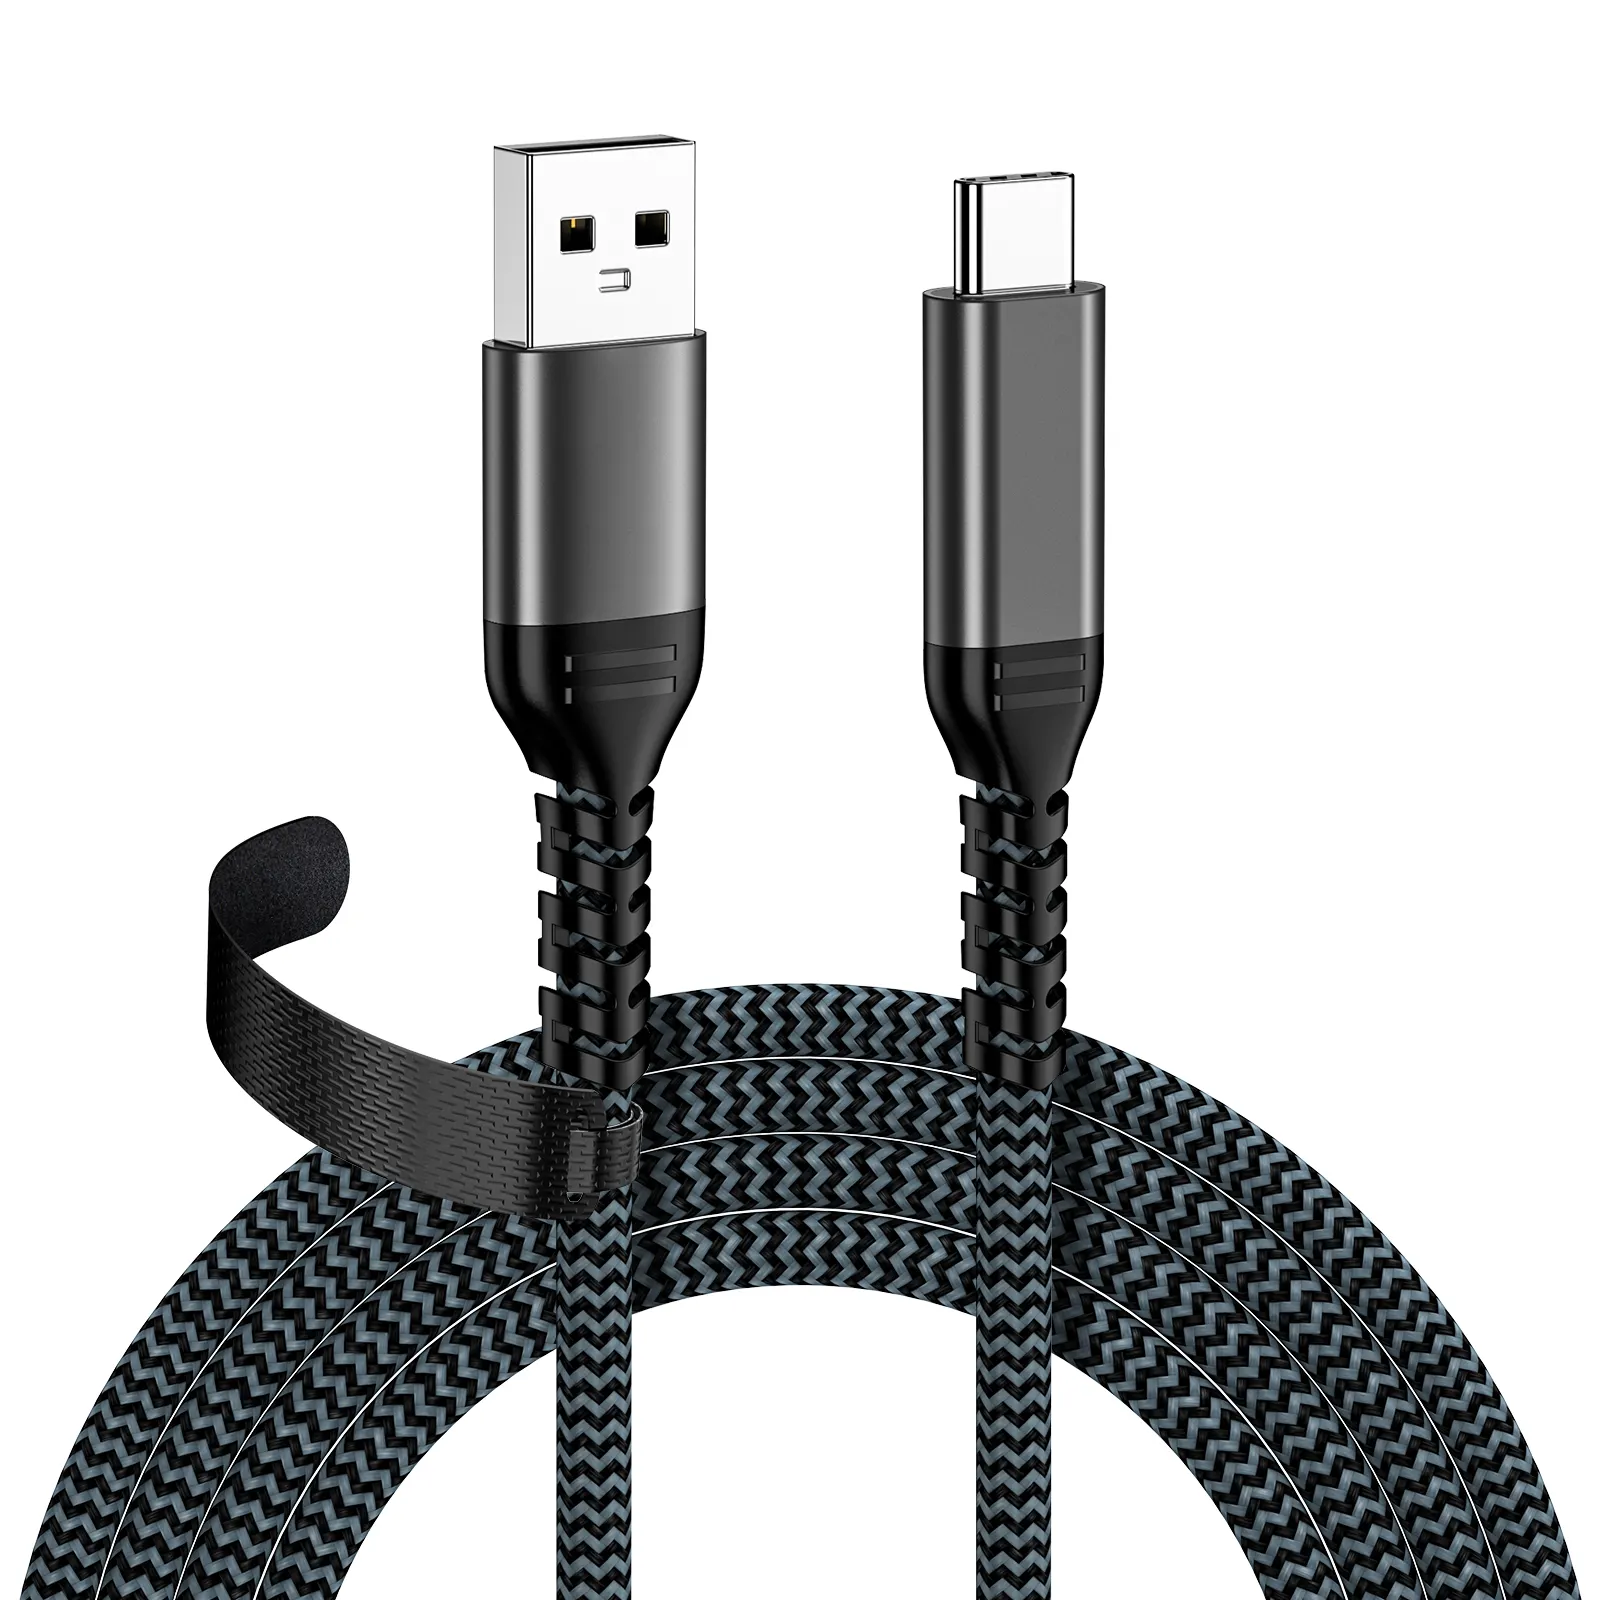 Kabel pengisian daya Cepat USB 10Gbps, kabel USB A ke USB C, kabel pengisian daya Cepat tipe C, kabel kepang USB 3.2